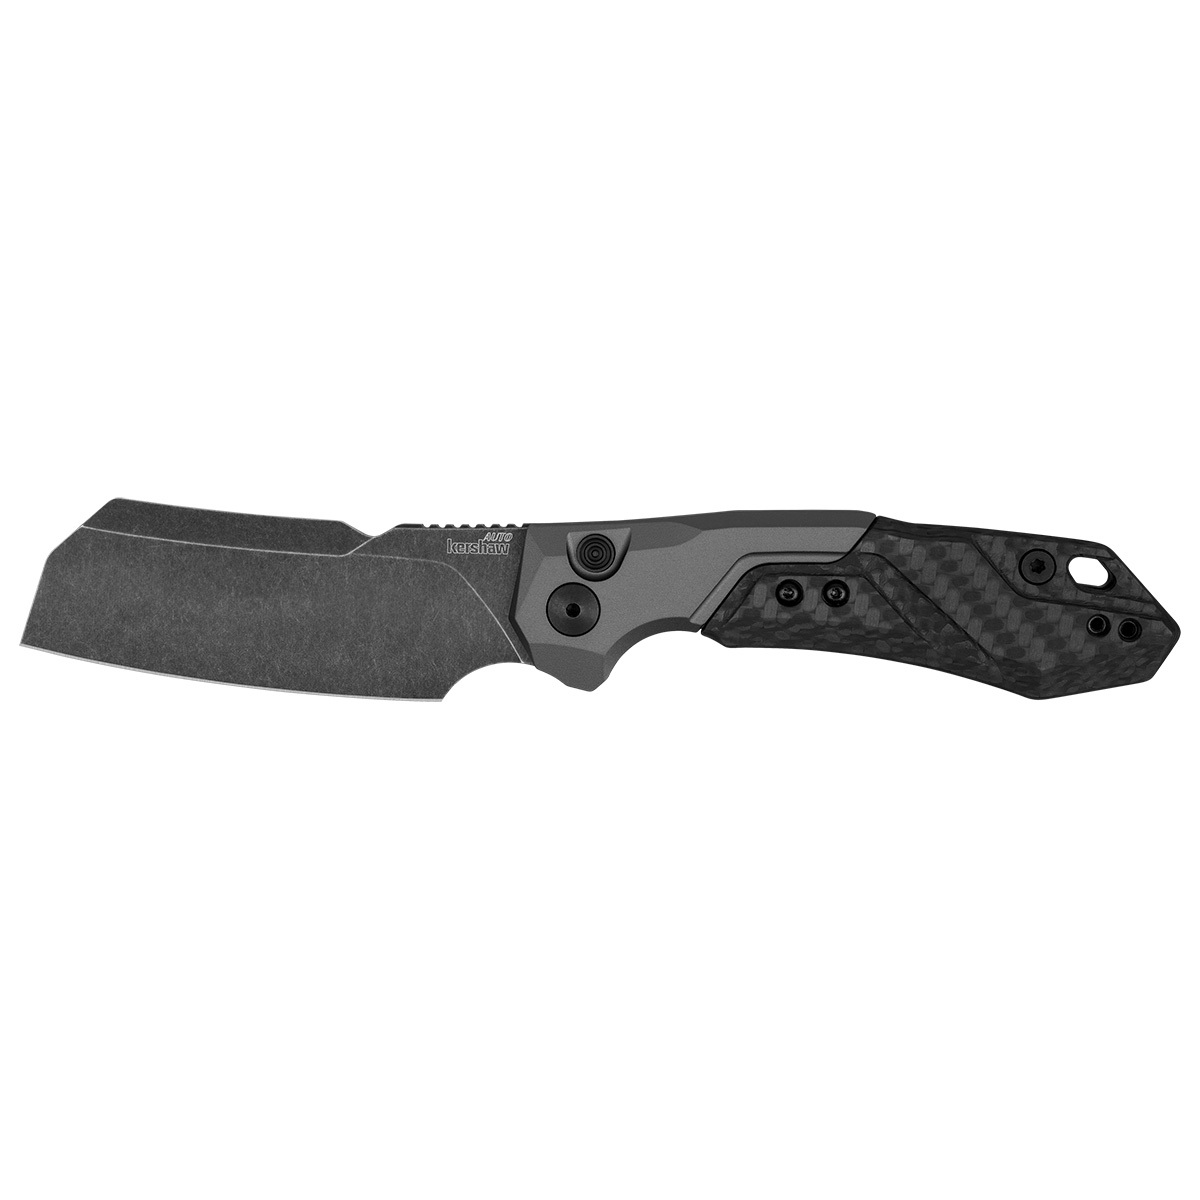 Складной нож Kershaw Launch 14, сталь CPM154, рукоять алюминий/Carbon fiber